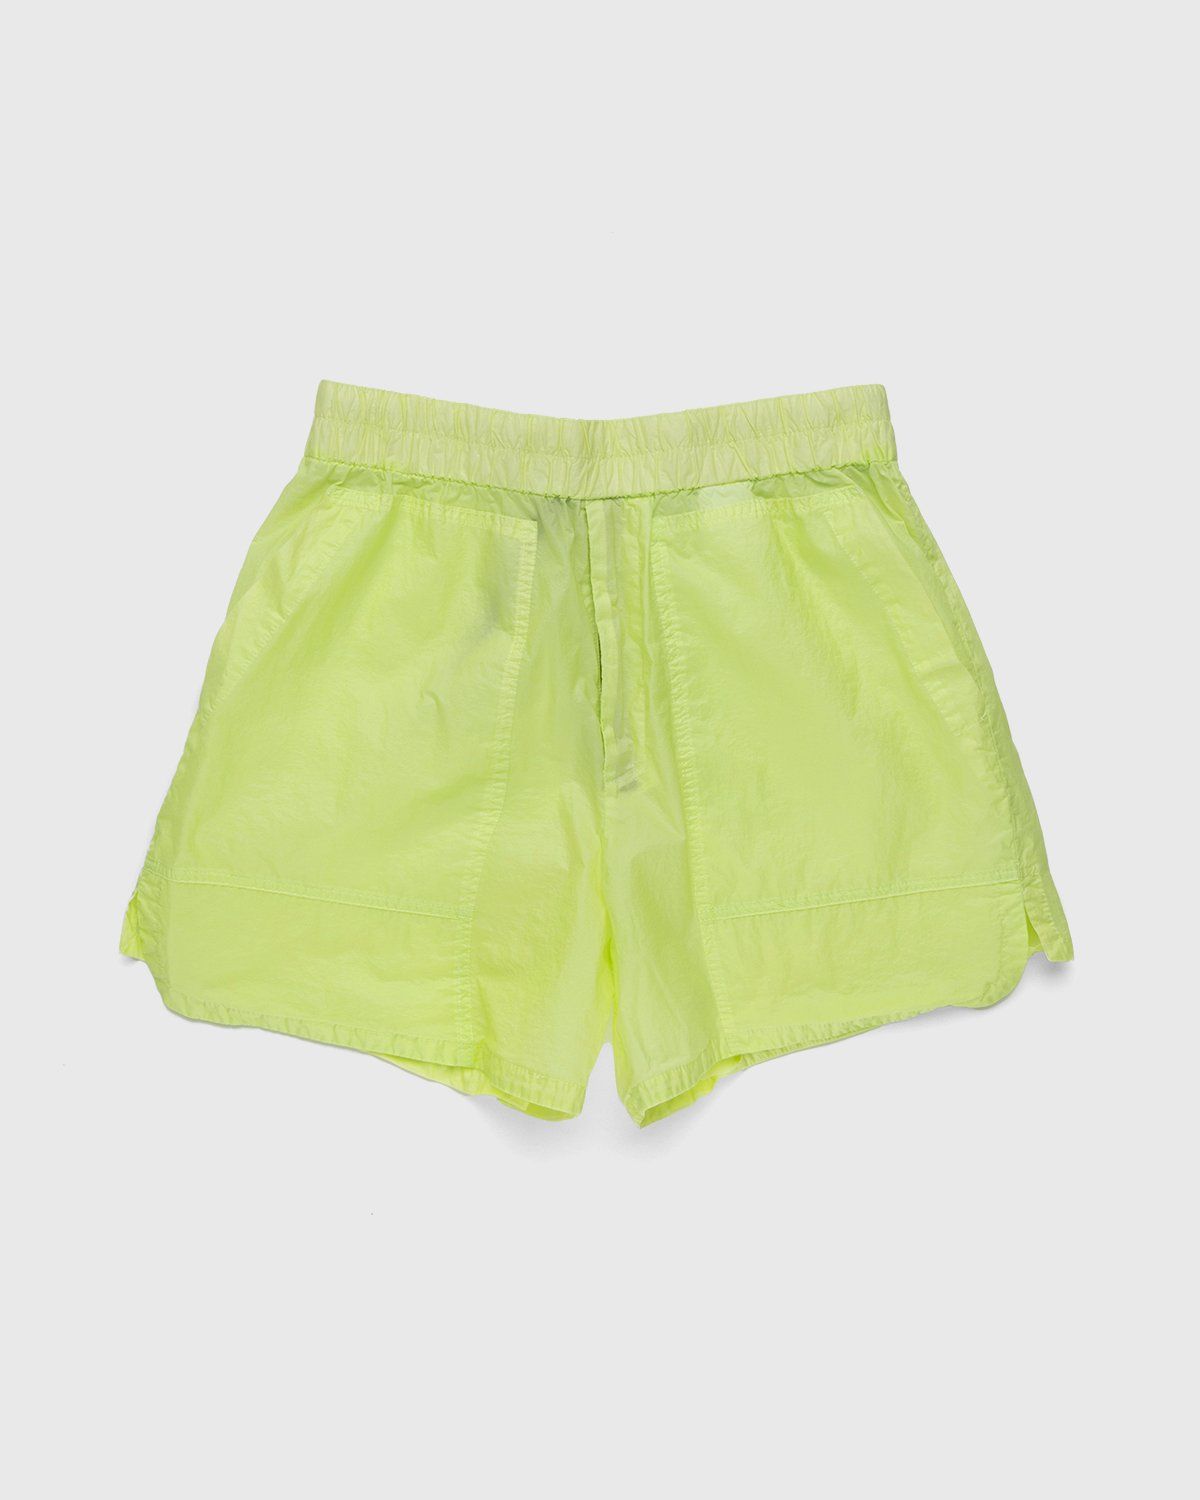 Dries Van Noten – Pooles Shorts Lime - Image 1